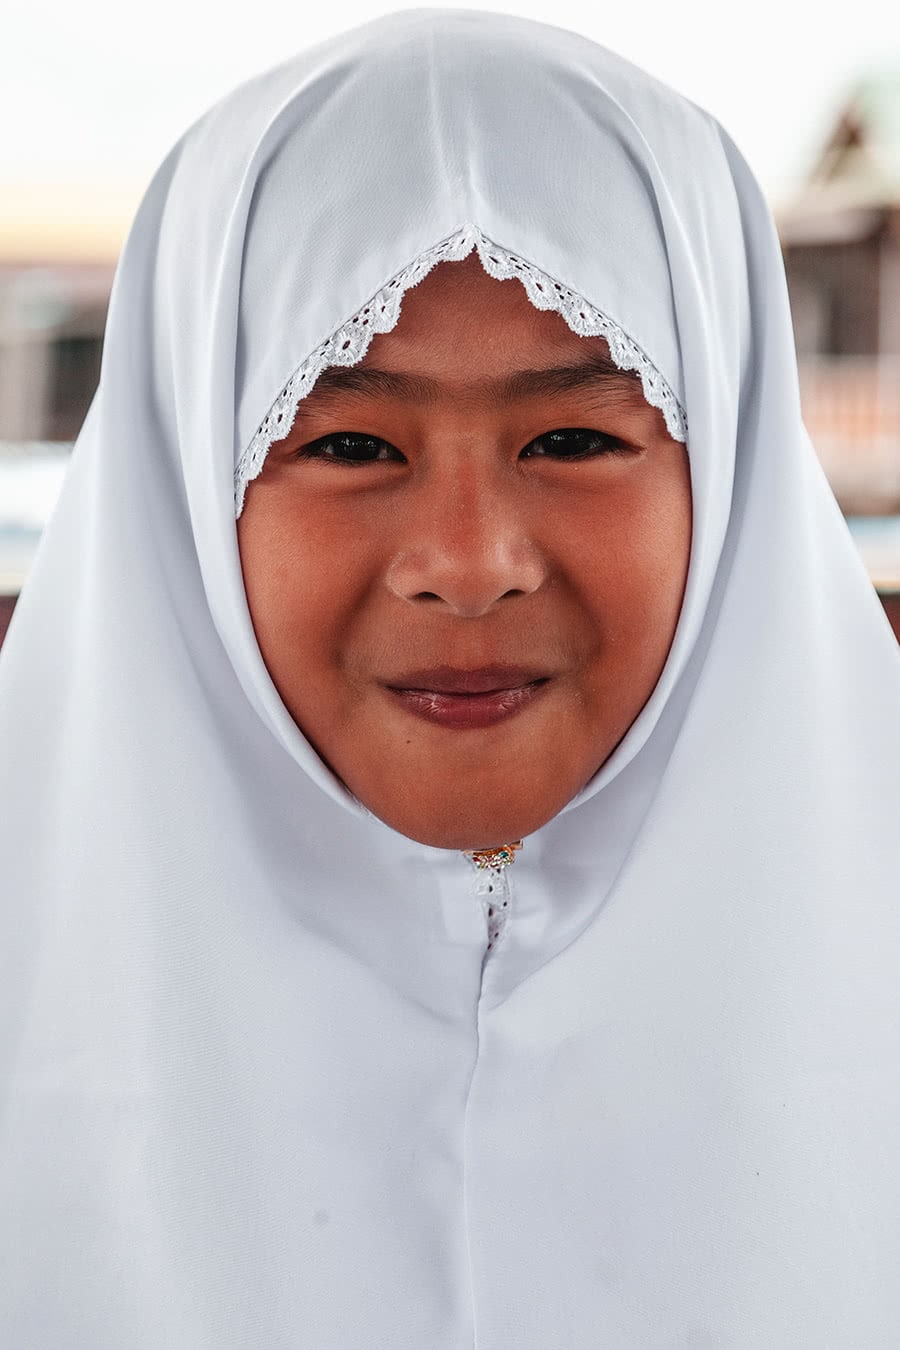 Student in Bandar Seri Begawan, Brunei wearing a muslim headscarf.